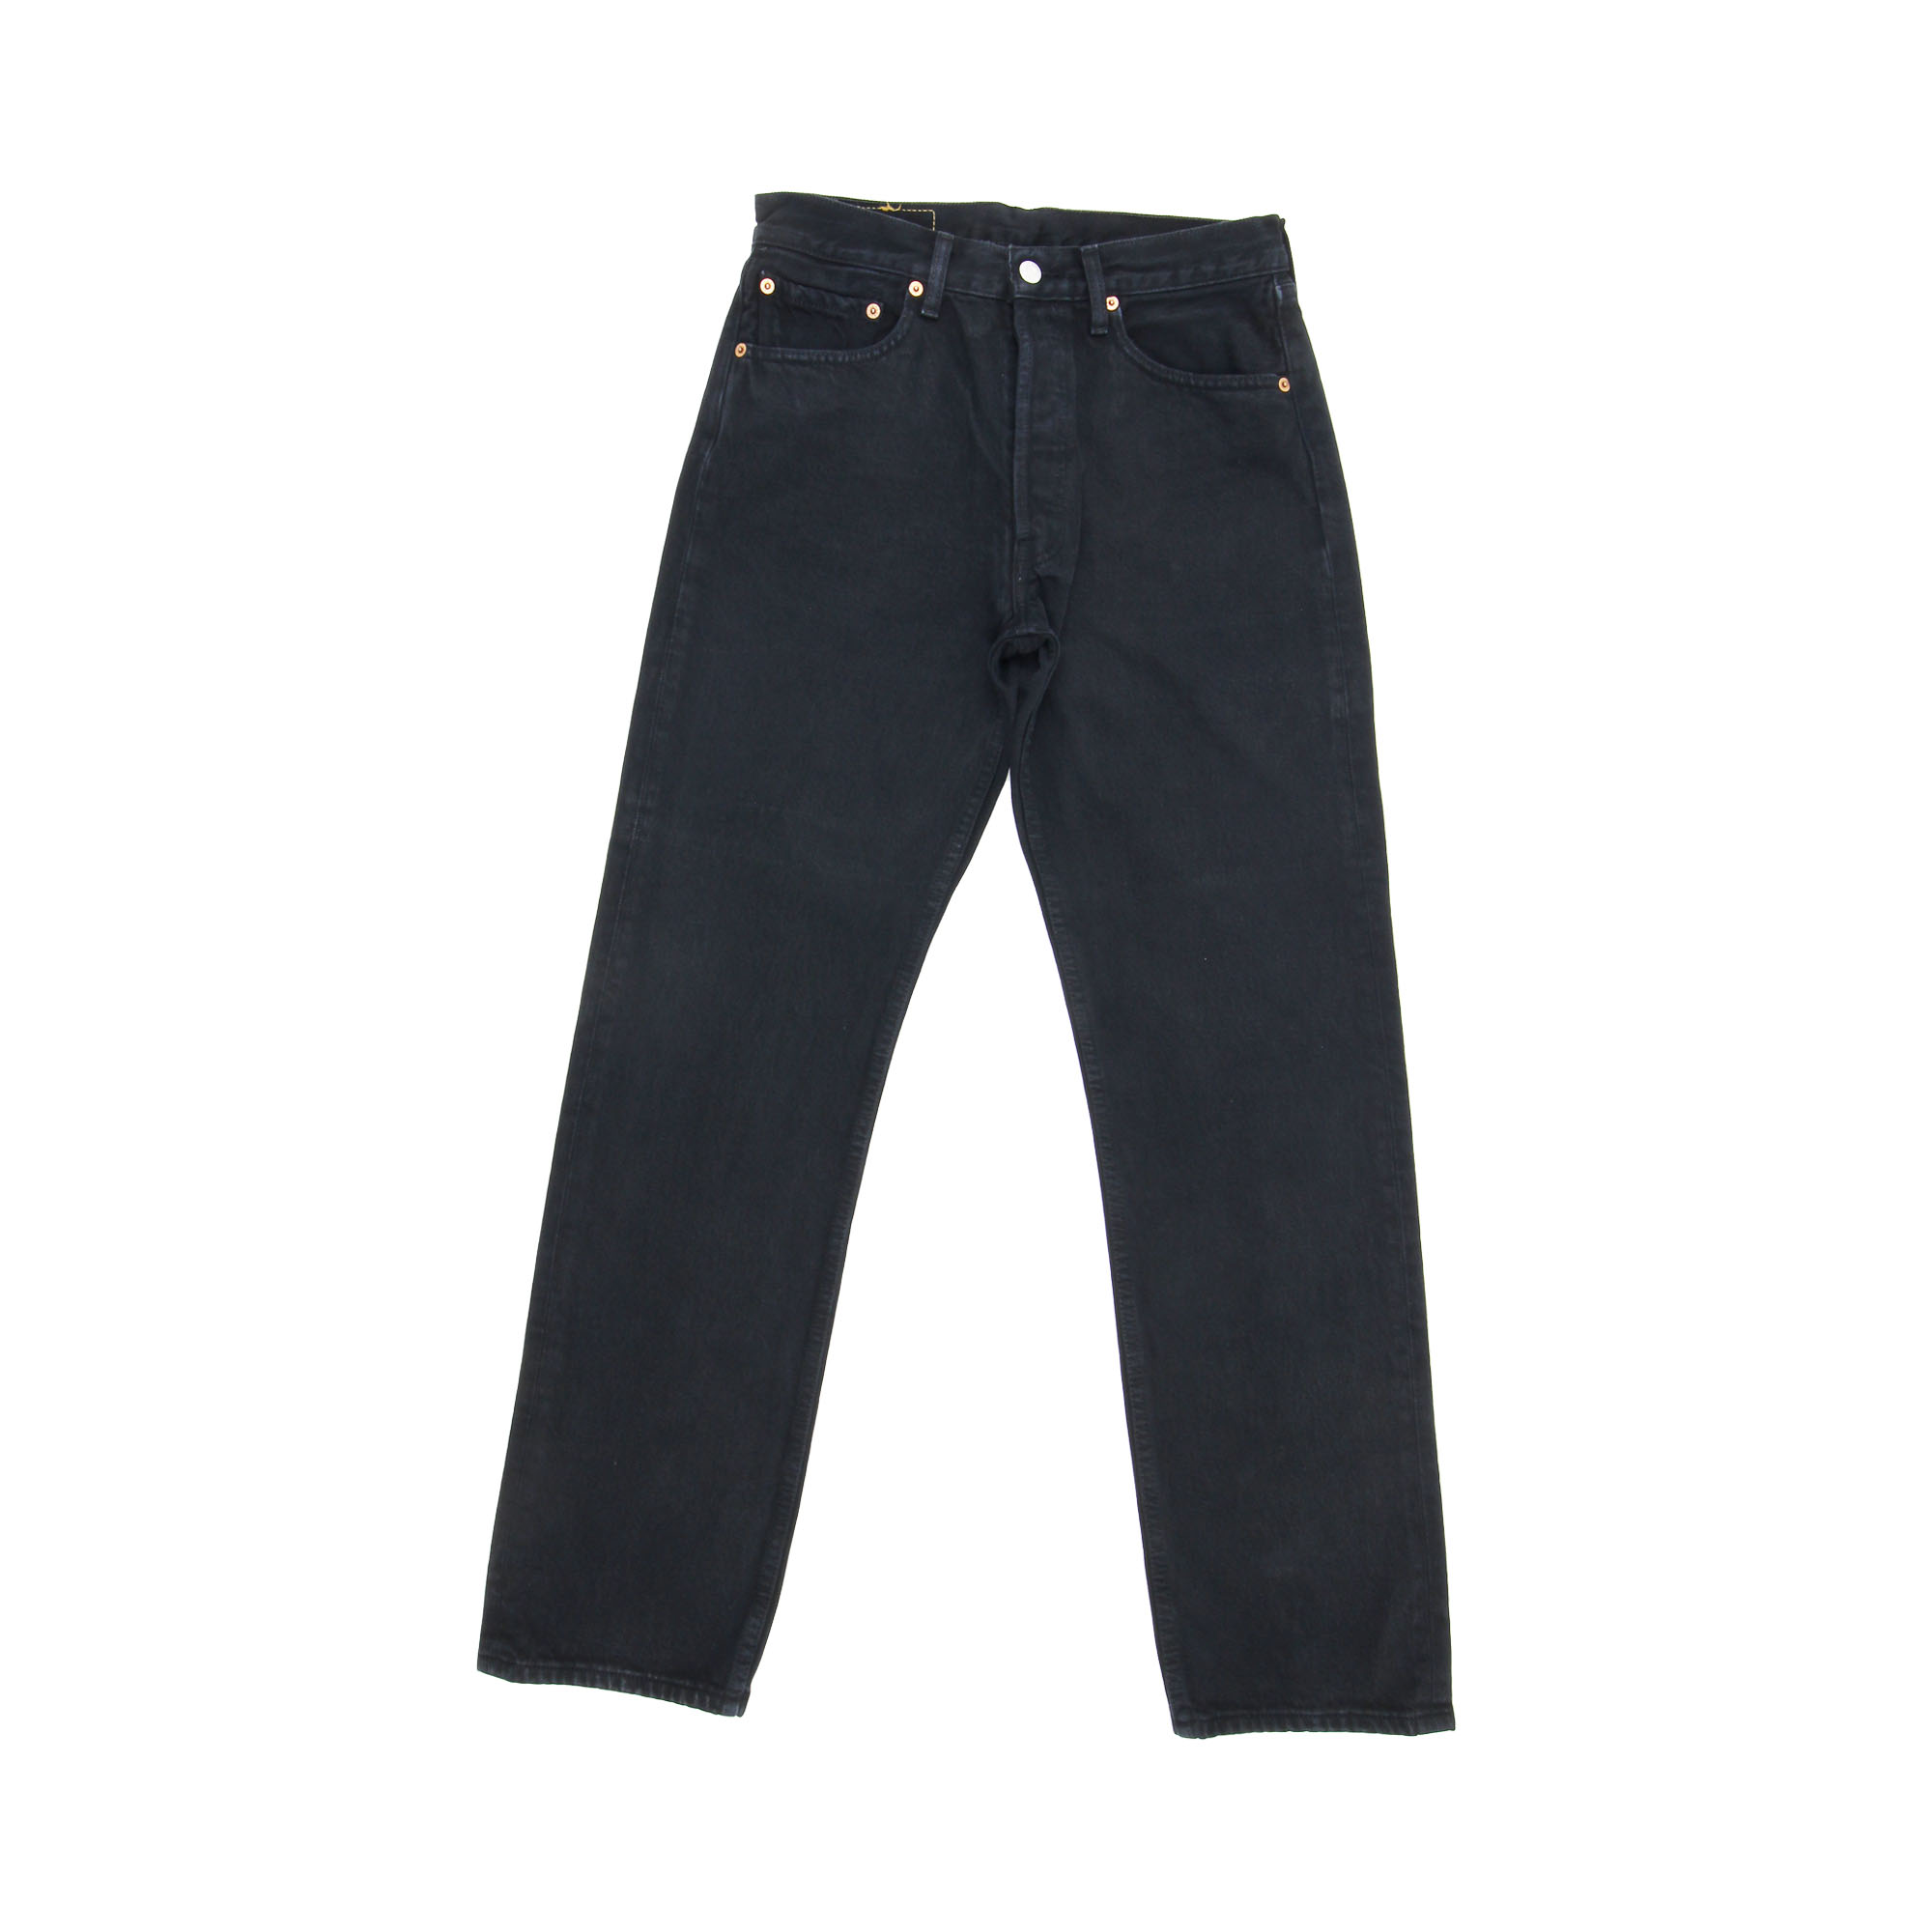 Levi's 501 Jeans Black -  W32 L32